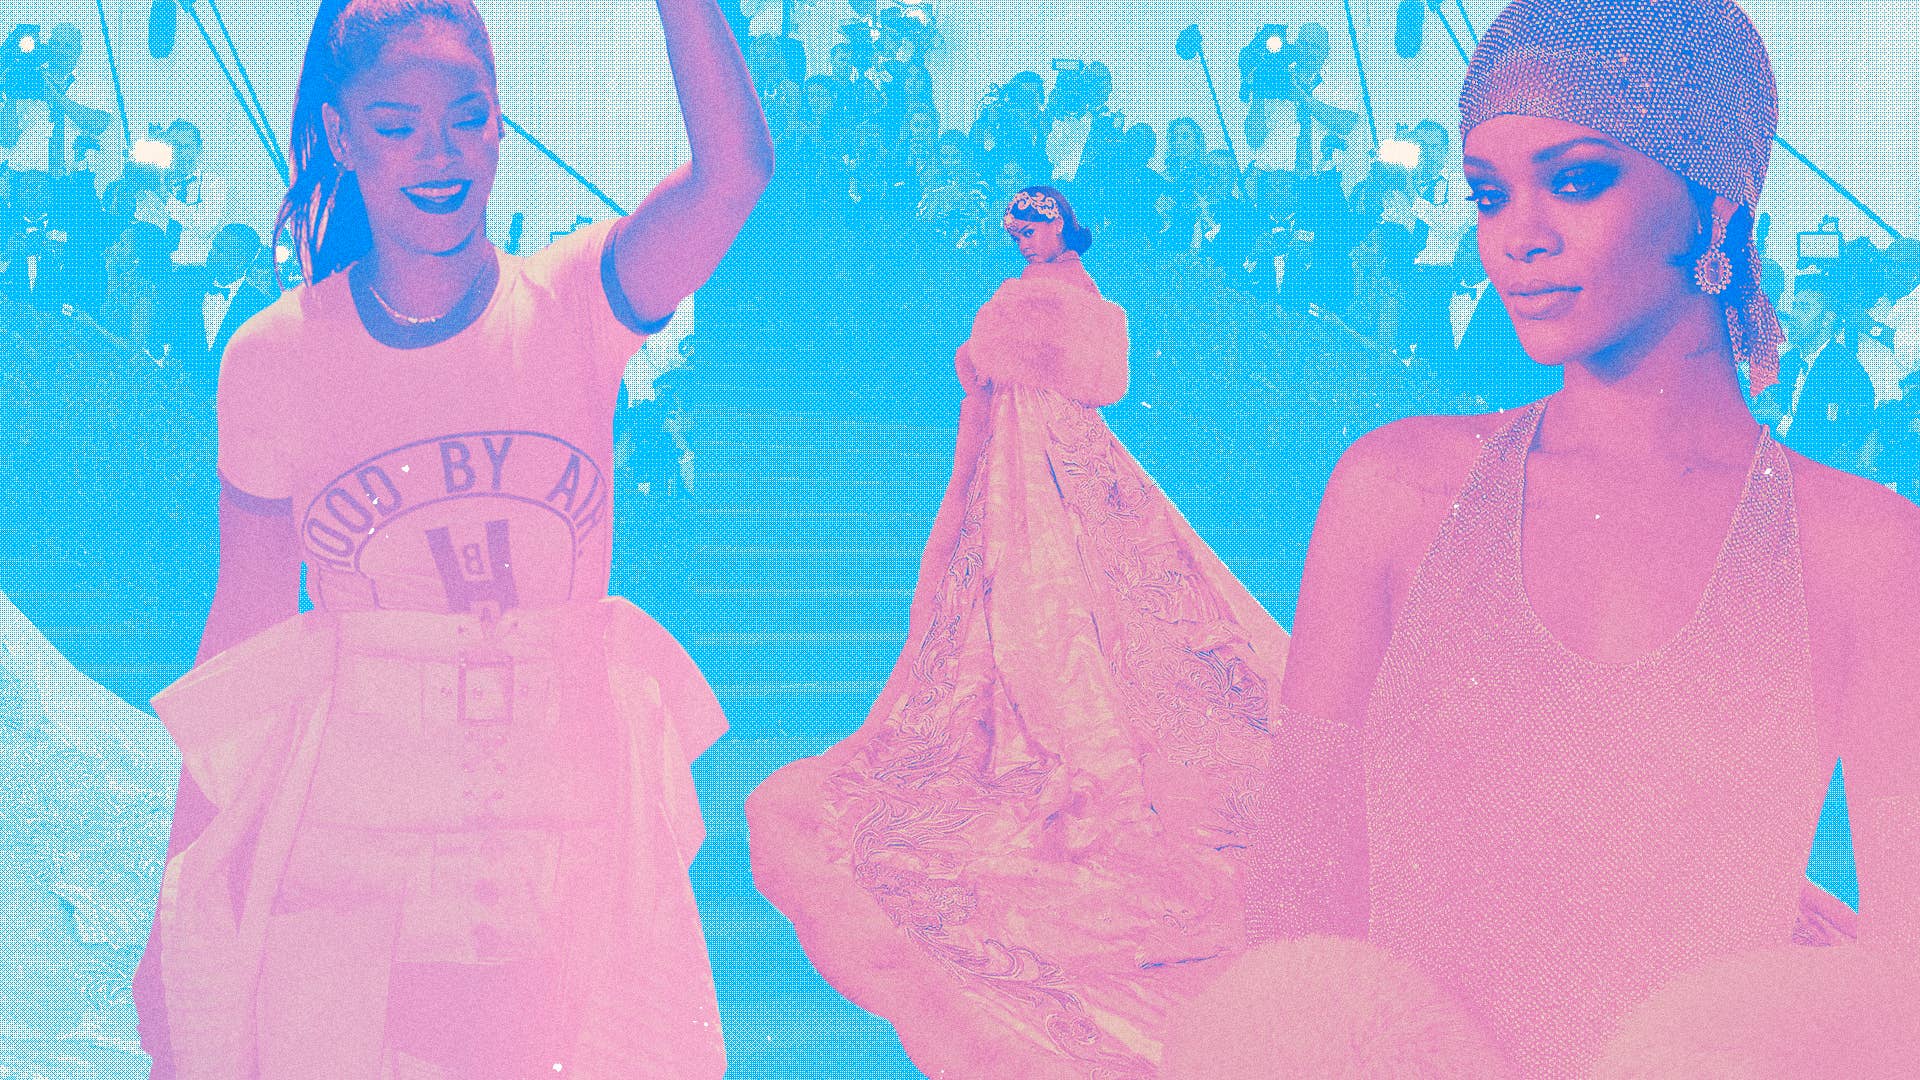 Rihanna's Louis Vuitton Soccer Ball Bag Is a Piece of '90s History